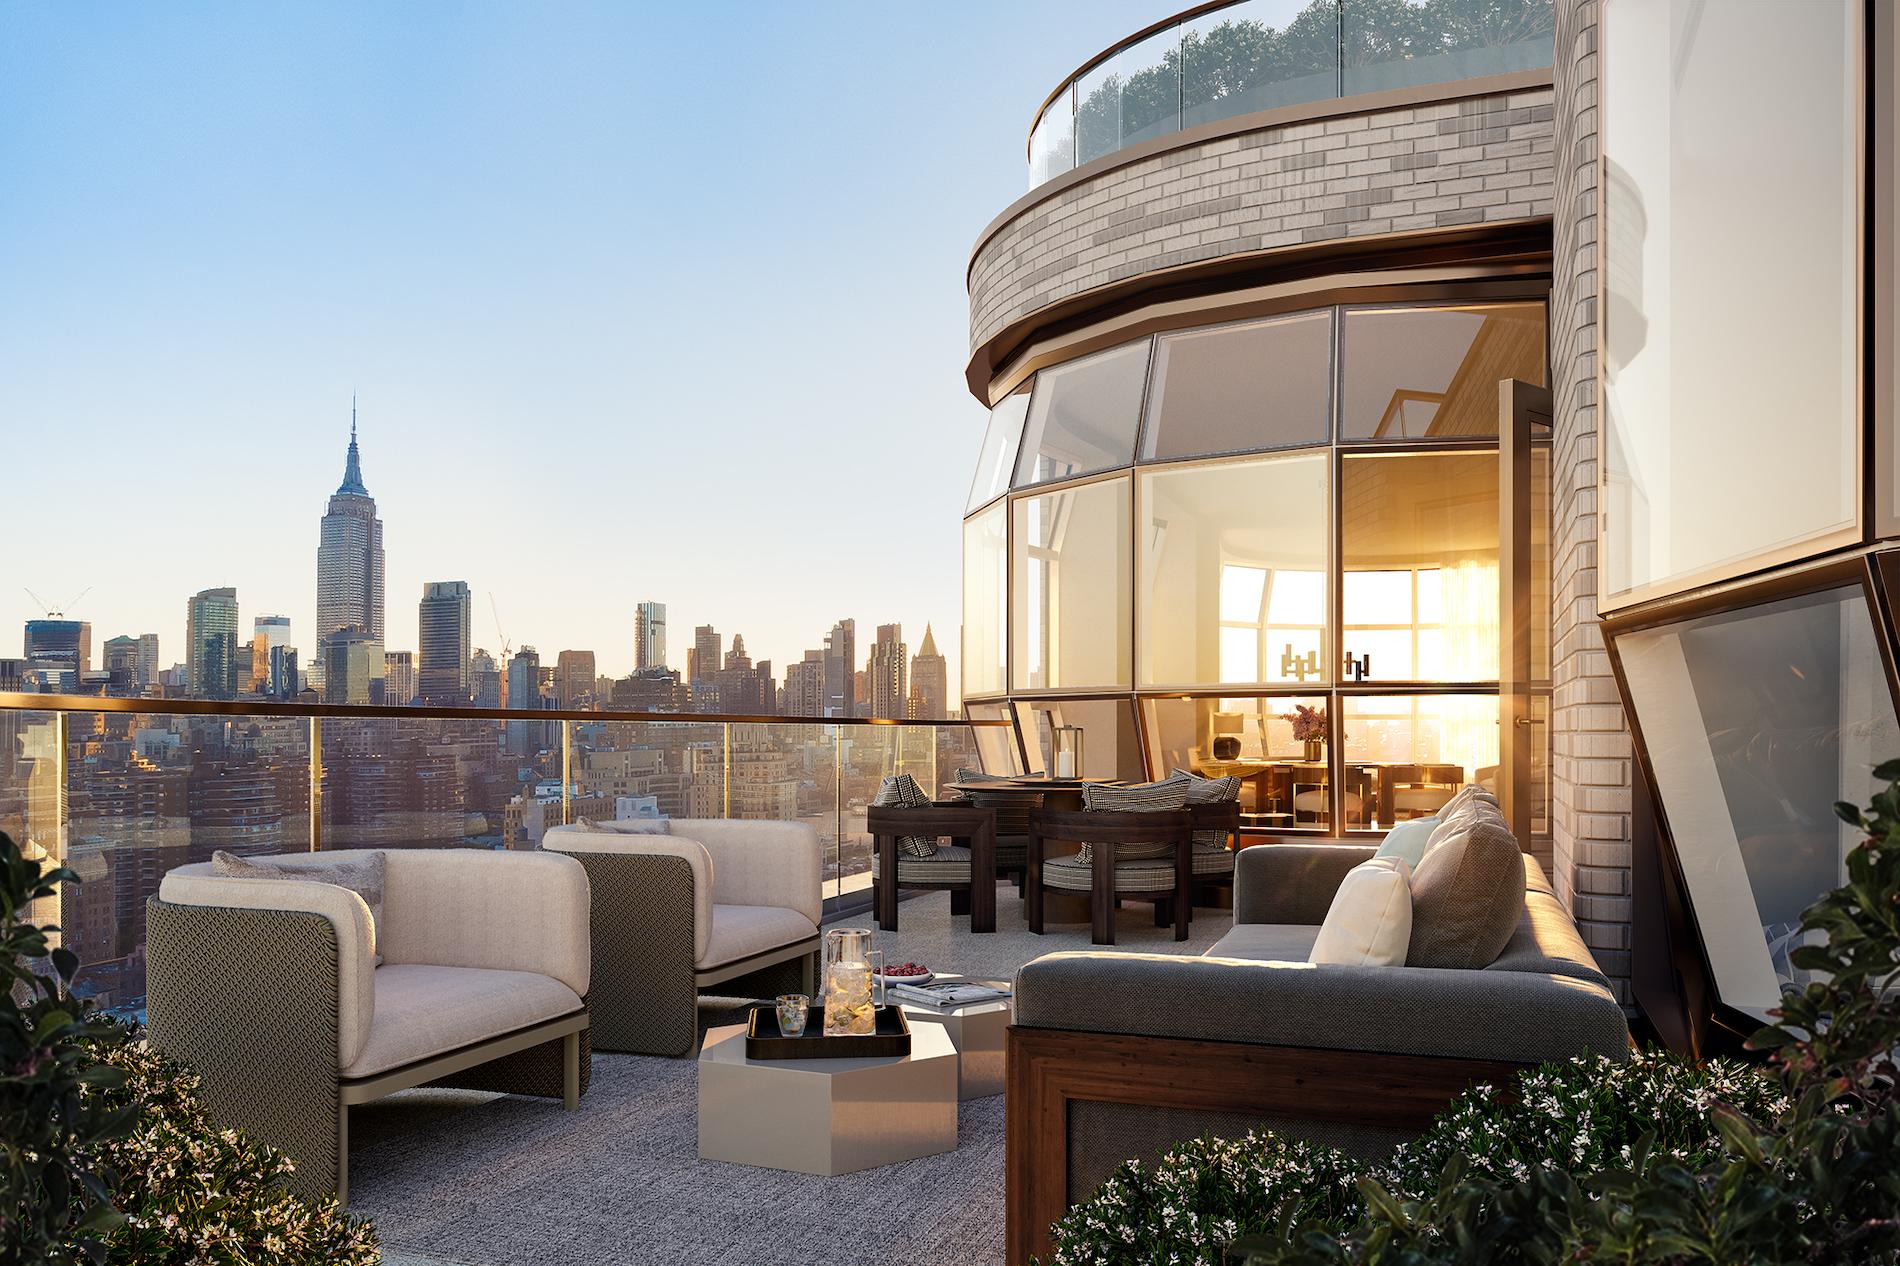 HJ Real Estate Guide: Lantern House in New York City